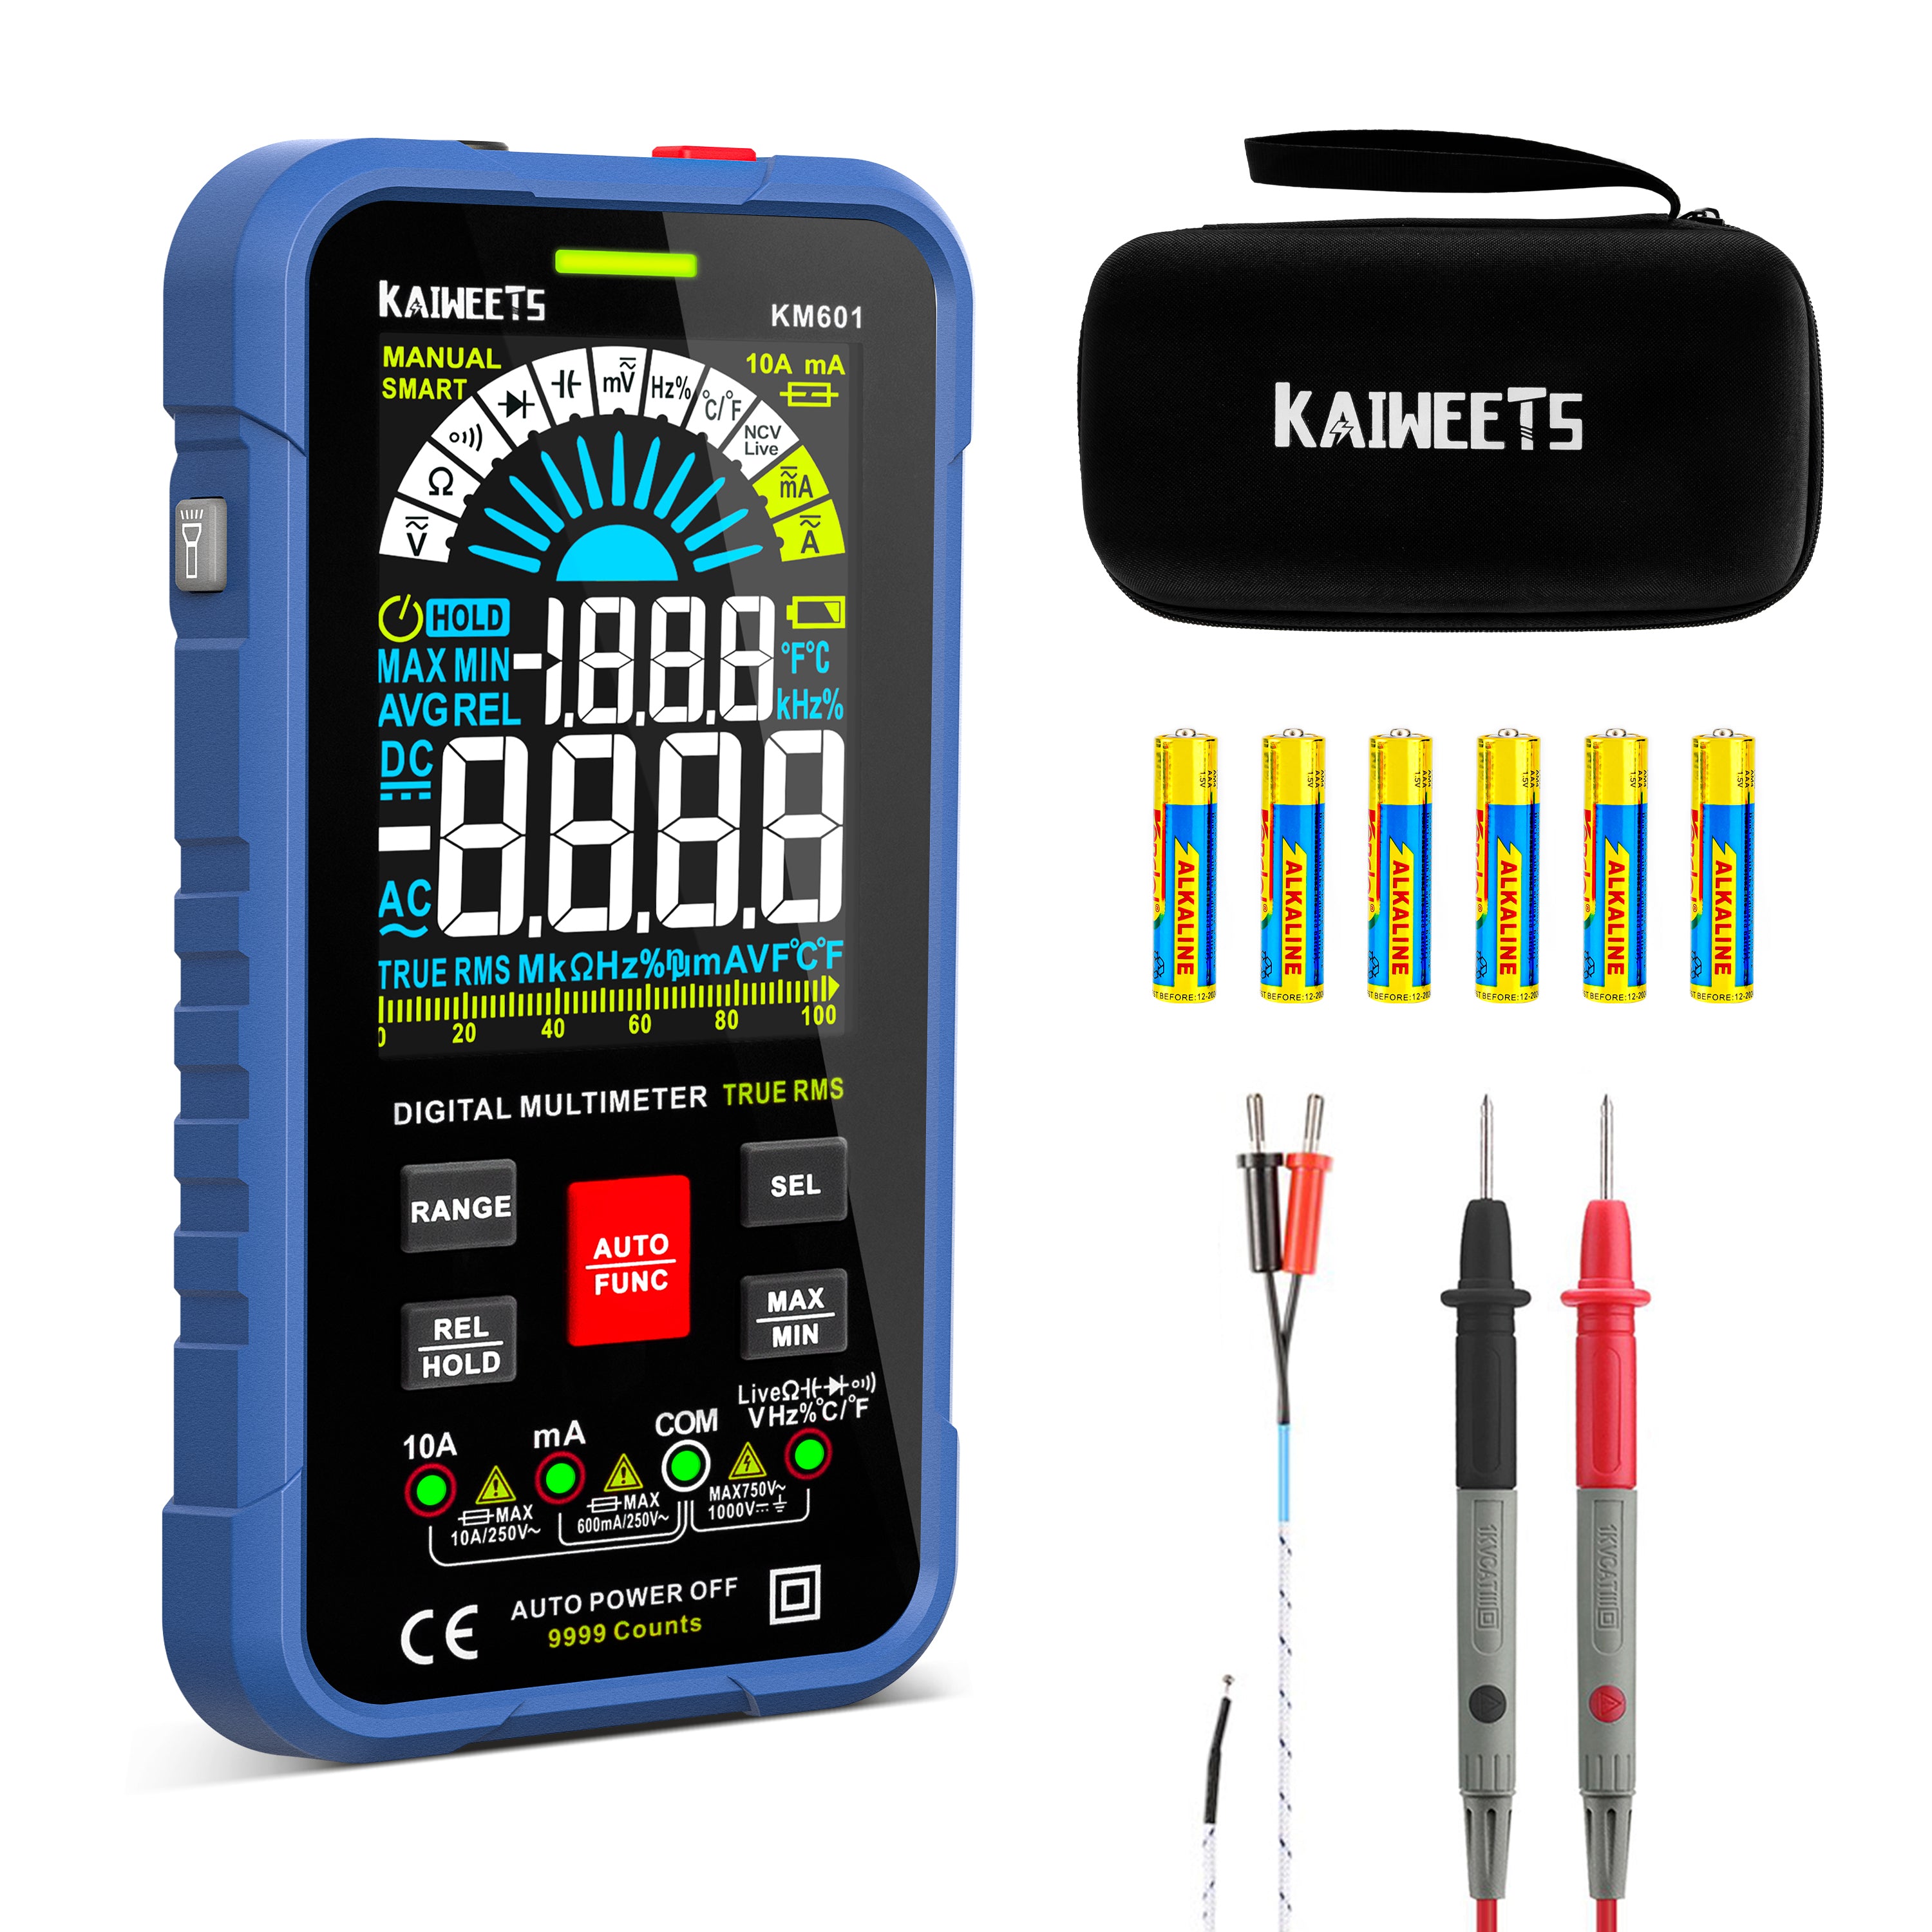 KAIWEETS KET05 Multimeter Test Leads Kit 23PCS for Electrical Testing